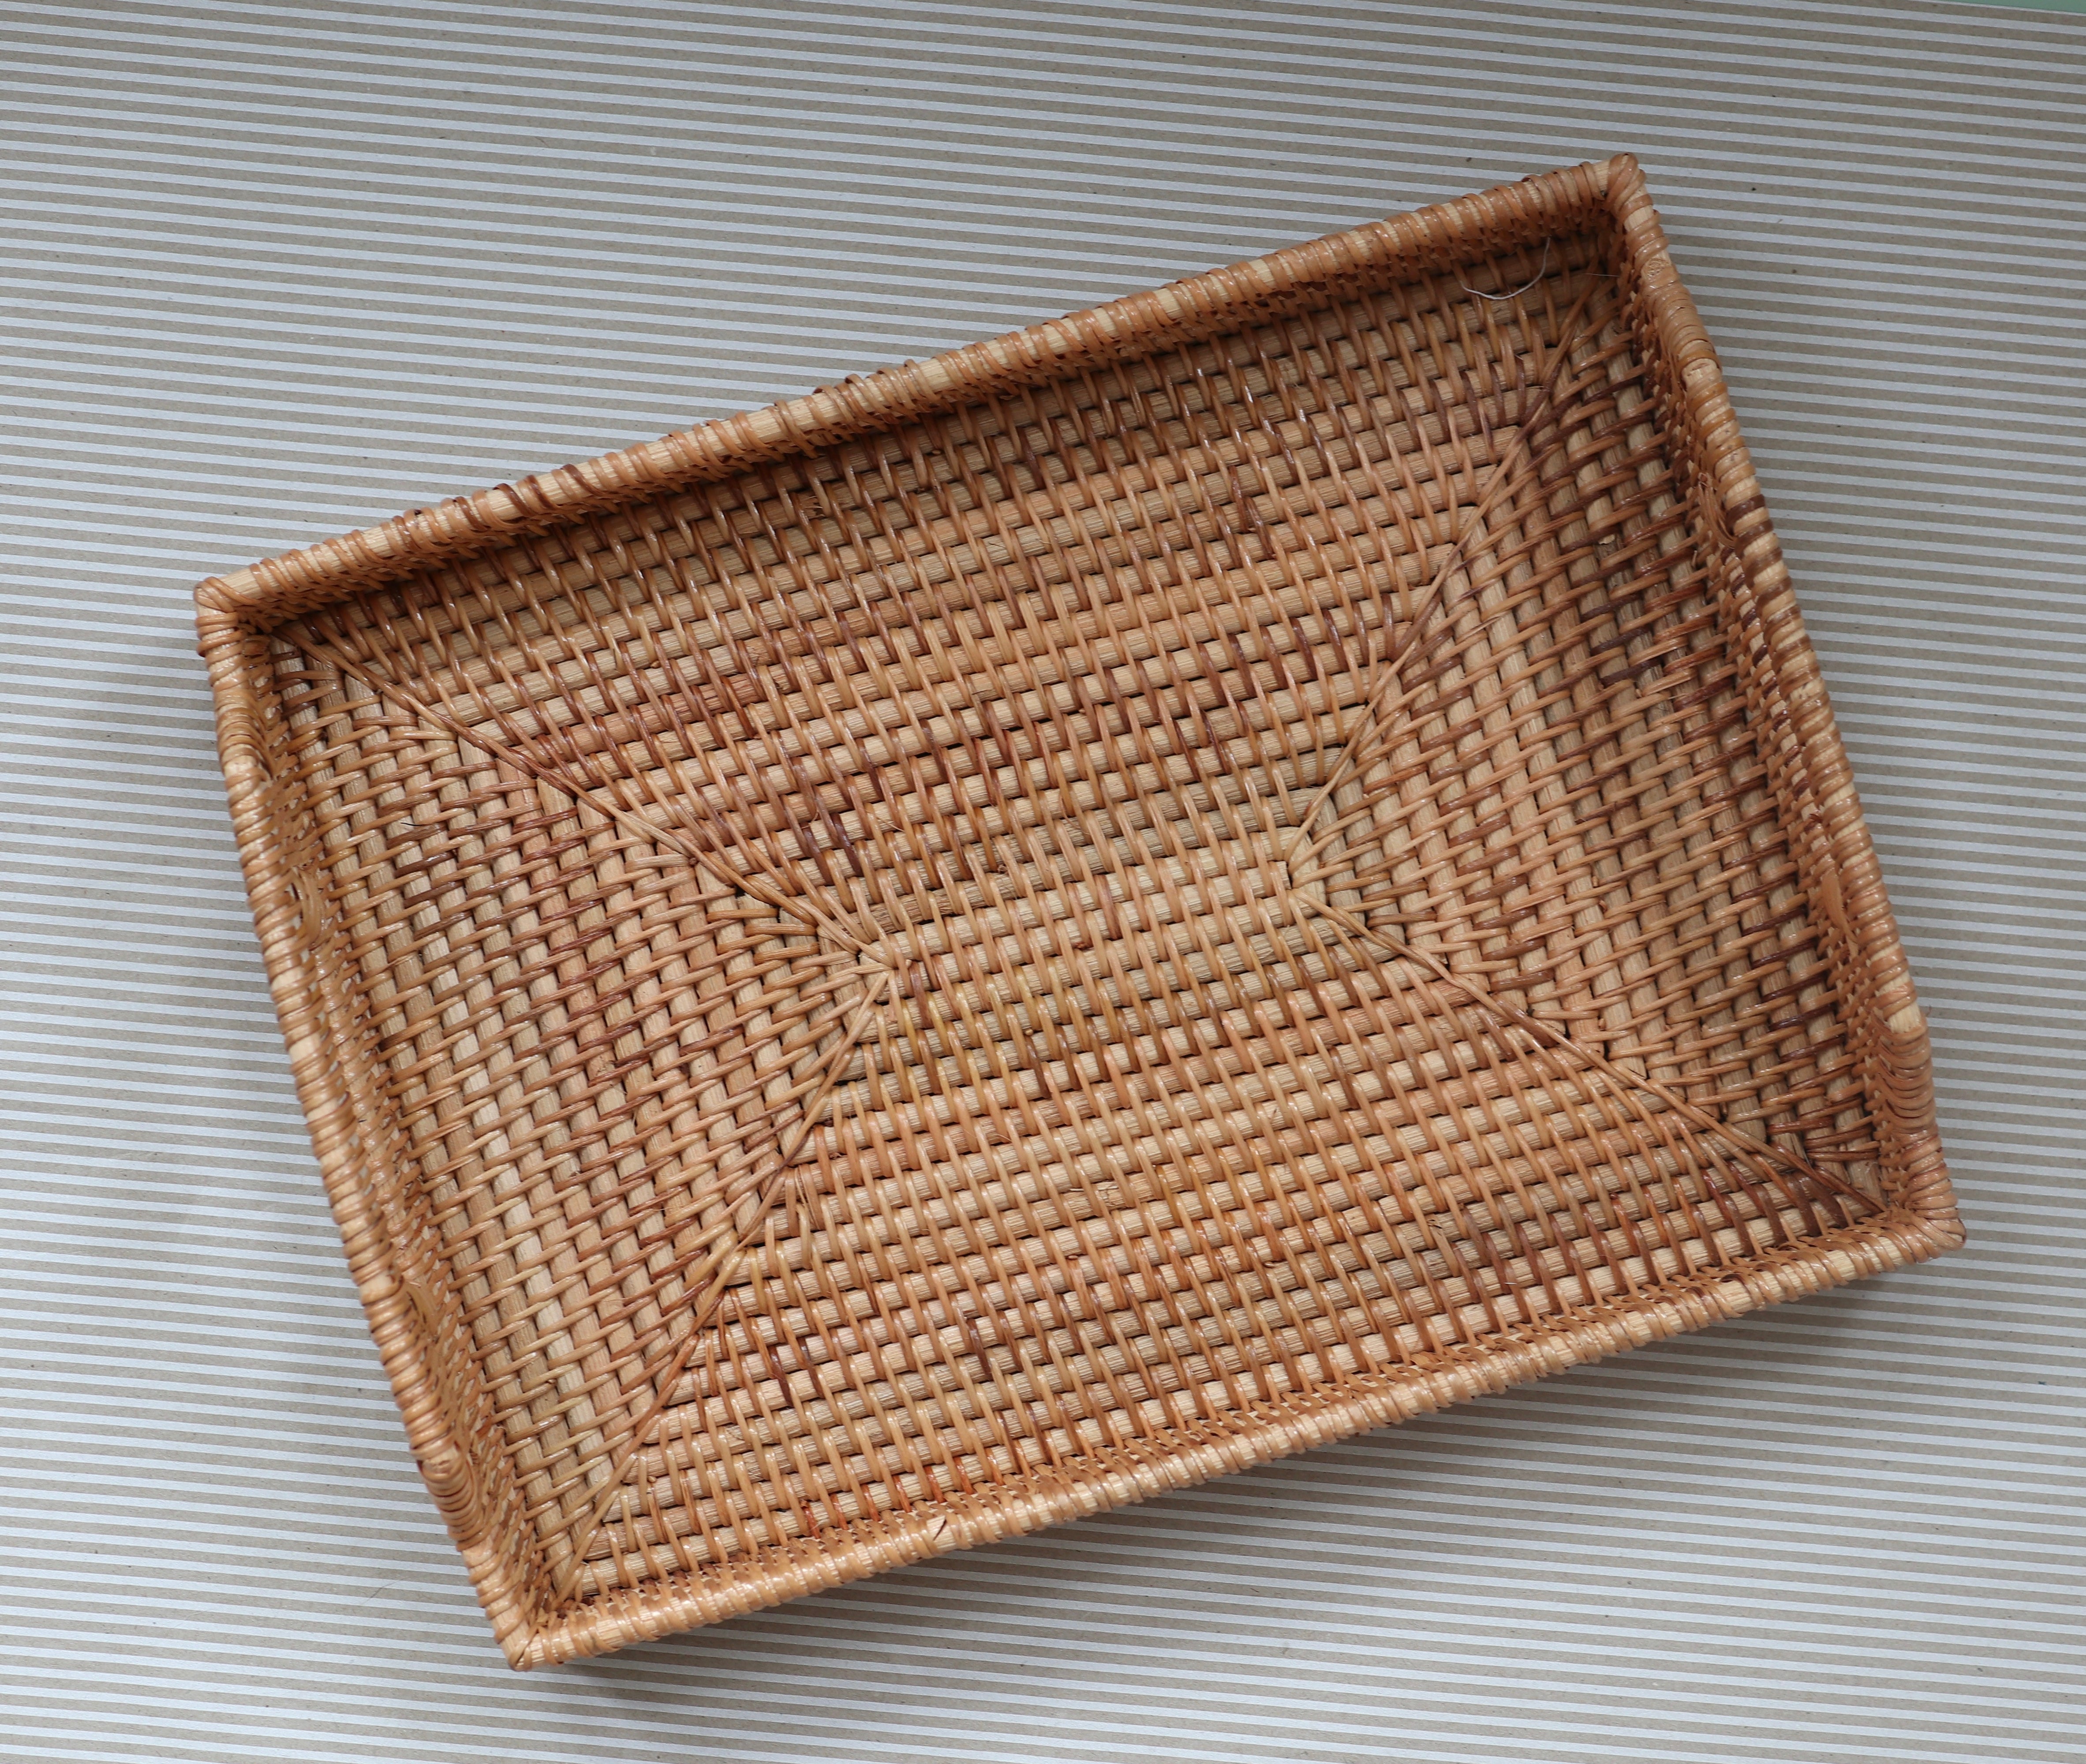 Handmade rattan tray